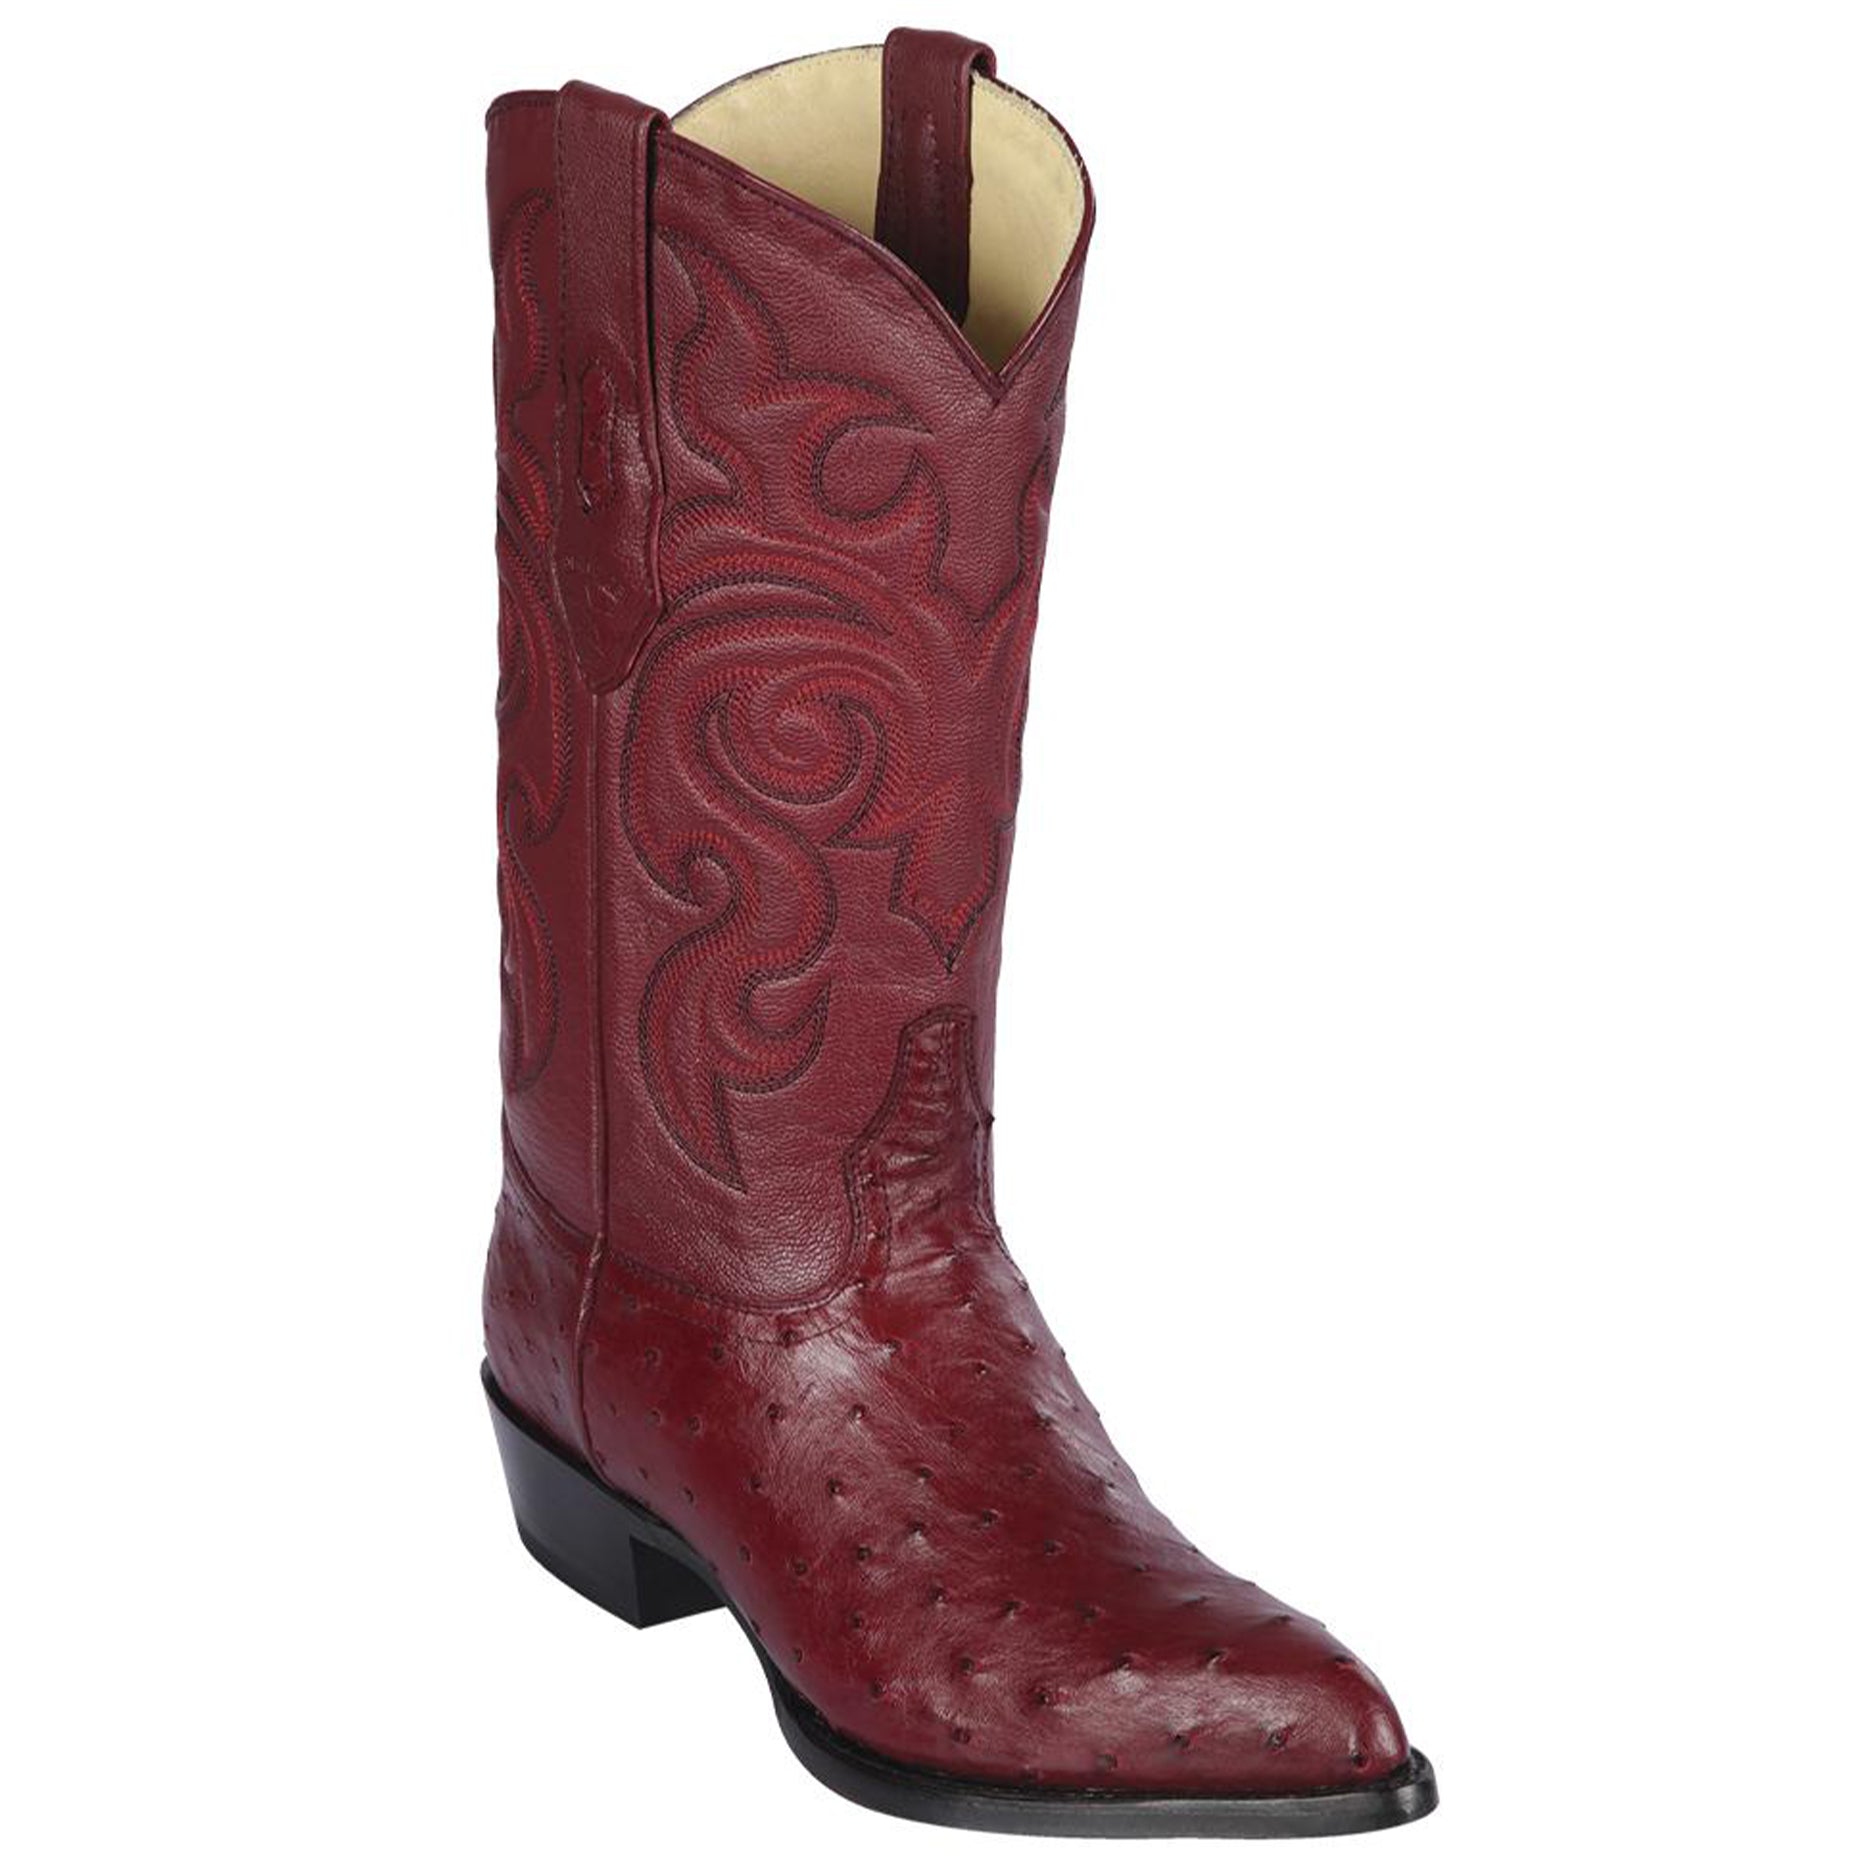 Burgundy Western Boots Sale | bellvalefarms.com